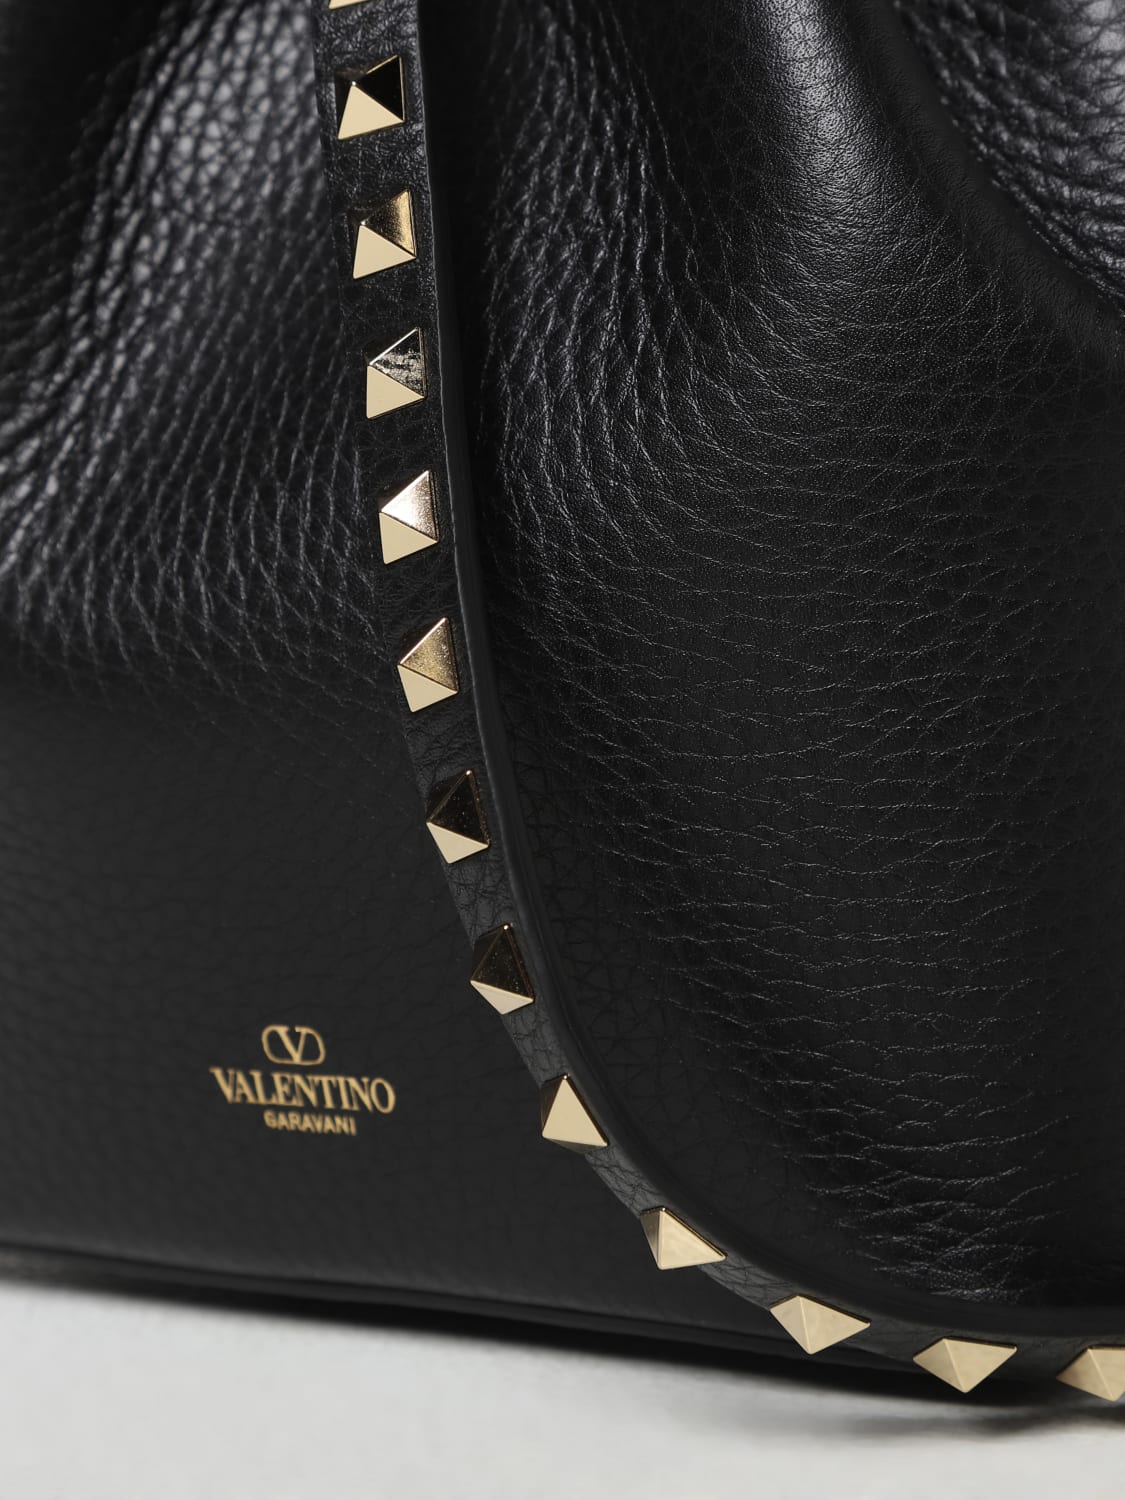 VALENTINO GARAVANI: Rockstud leather bag - Black  Valentino Garavani  crossbody bags 3W2B0181VSF online at